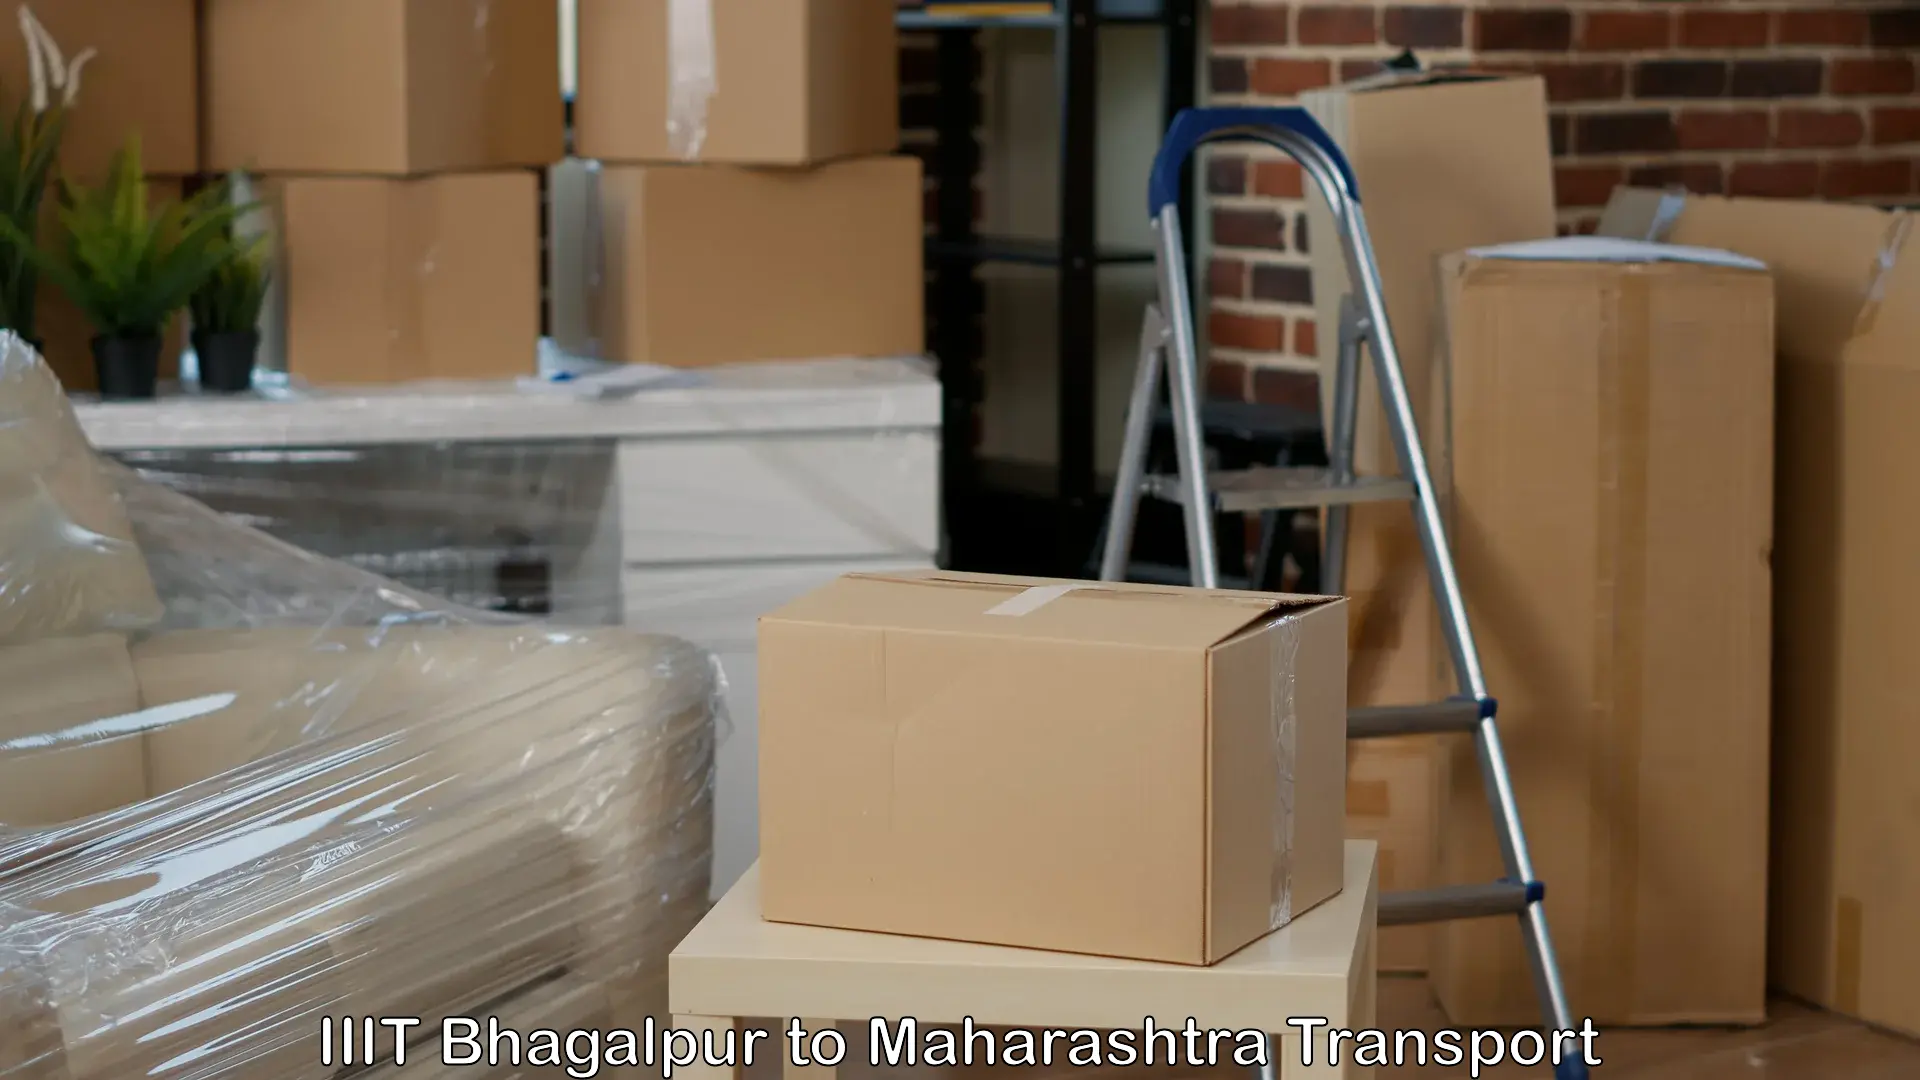 Goods delivery service IIIT Bhagalpur to Arni